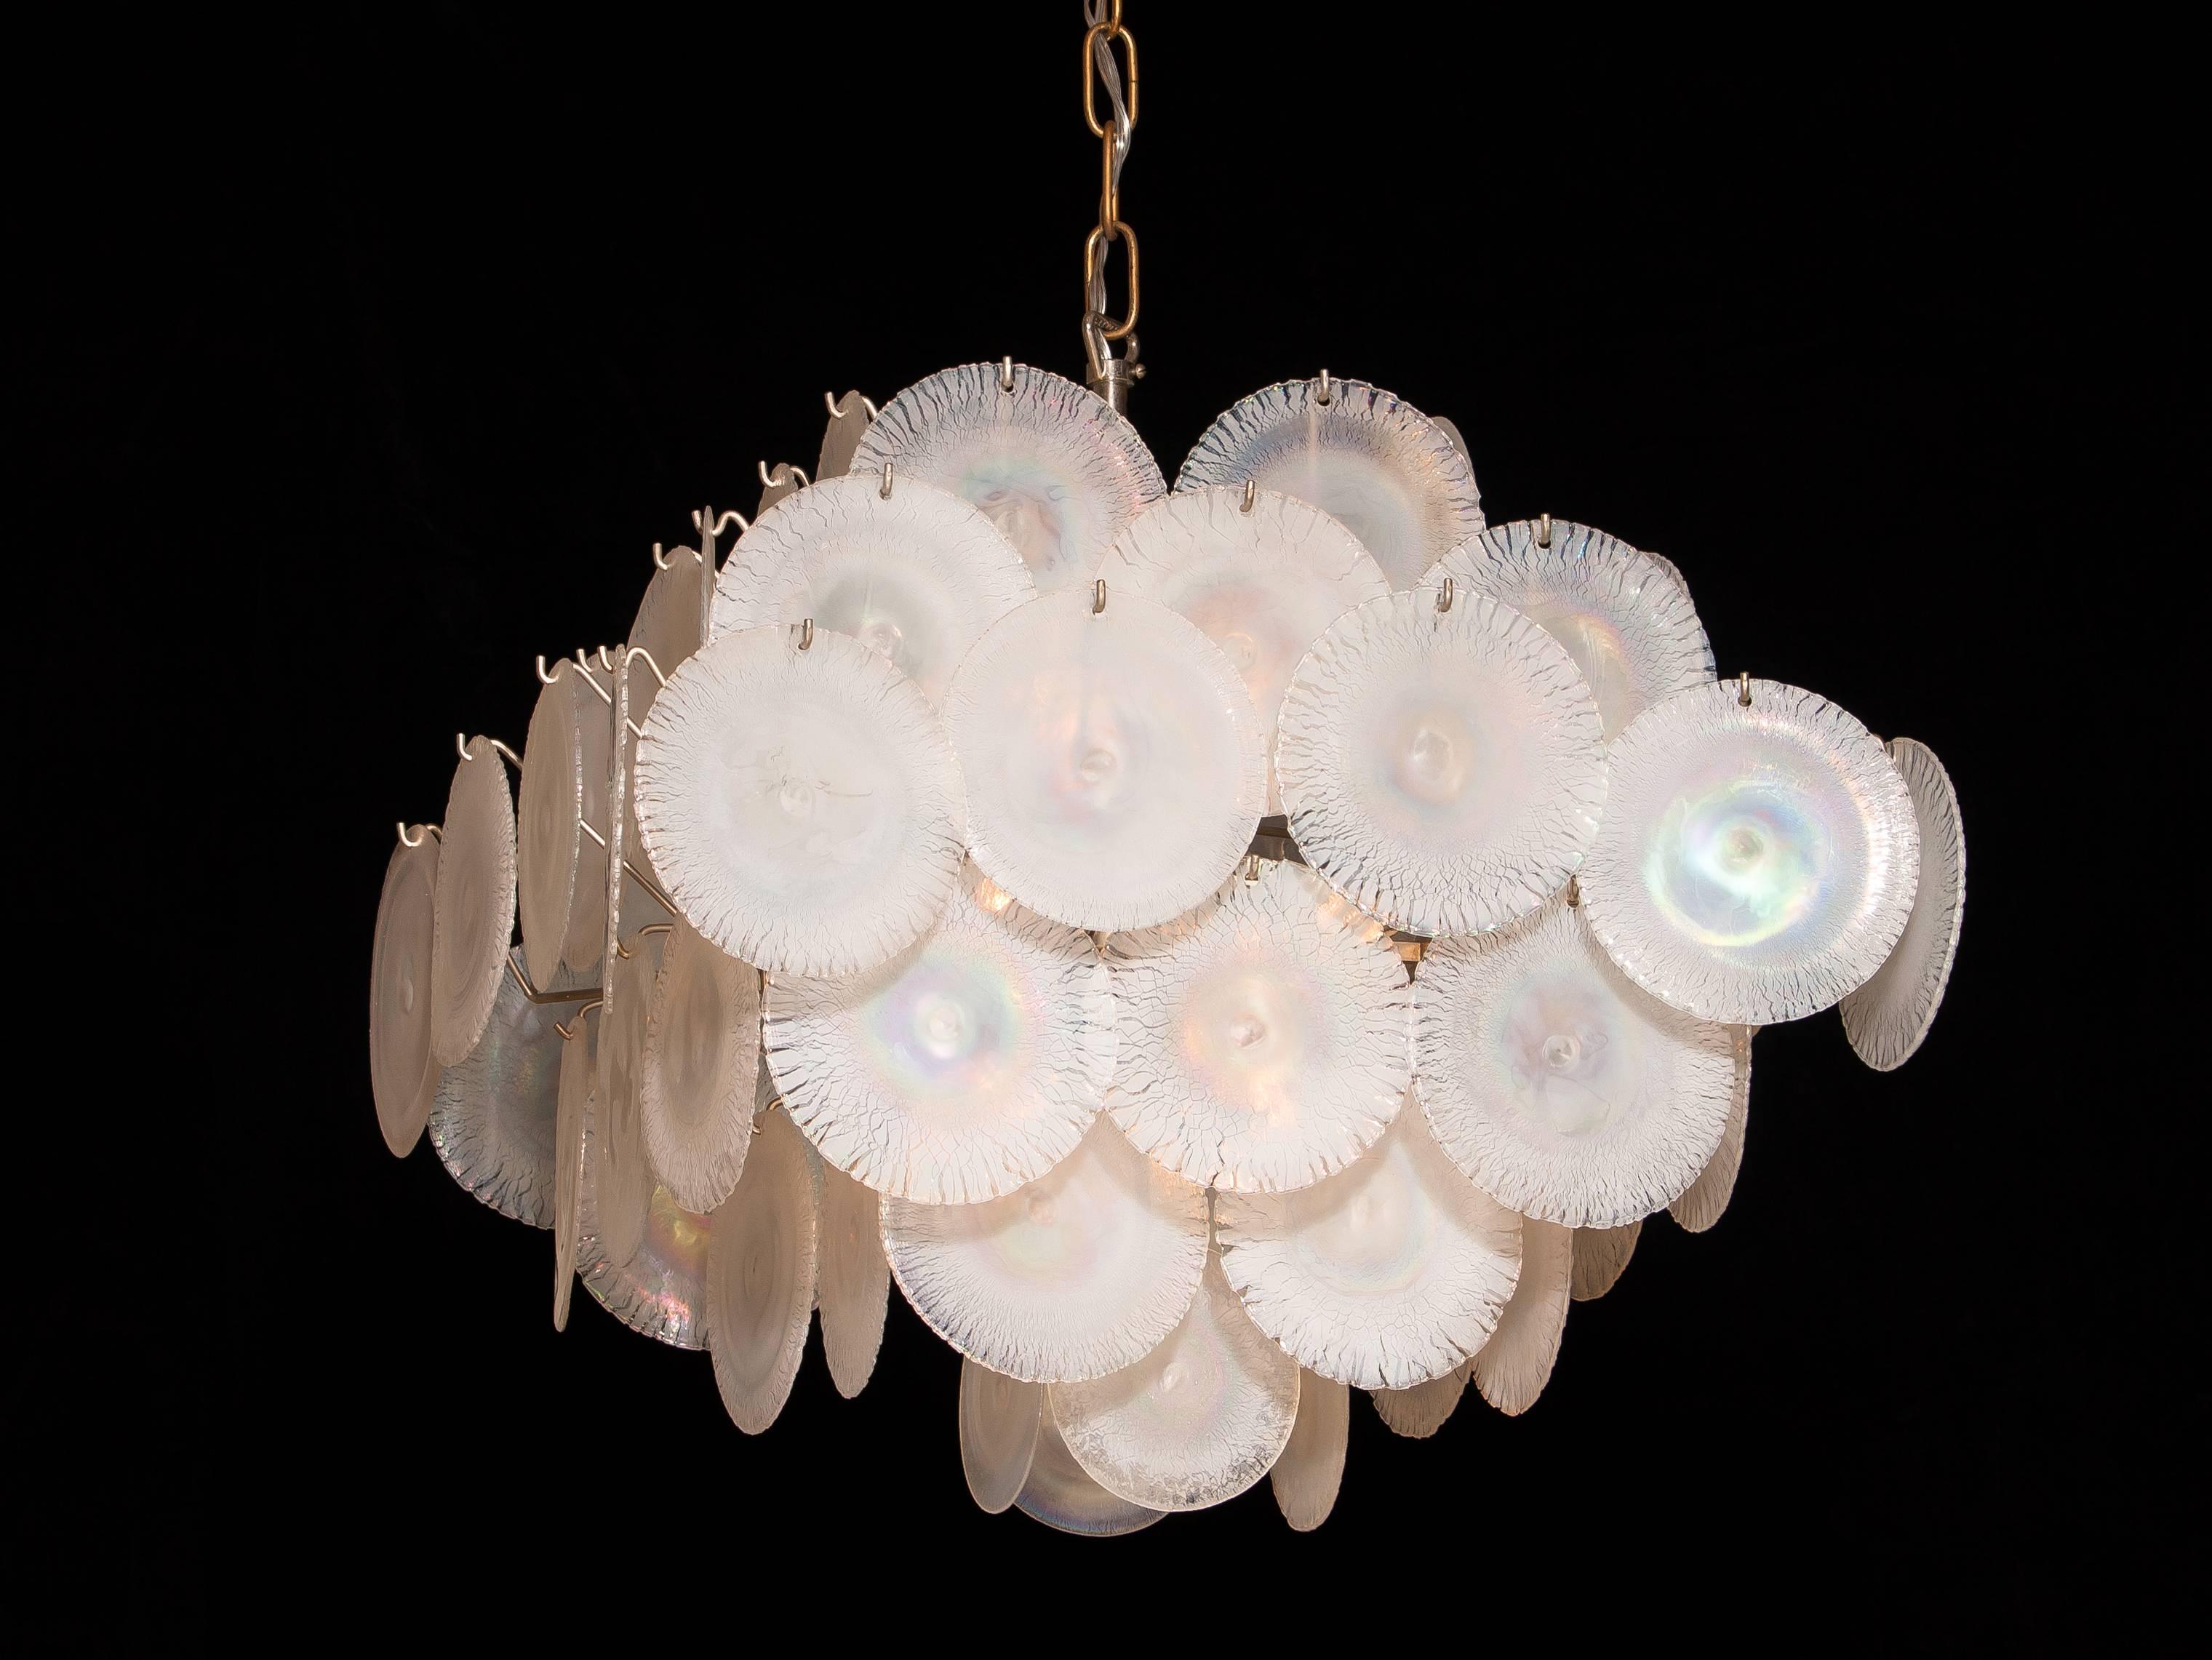 Italian Gino Vistosi Chandelier with 60 Handmade Murano White/Pearl Colored Crystals